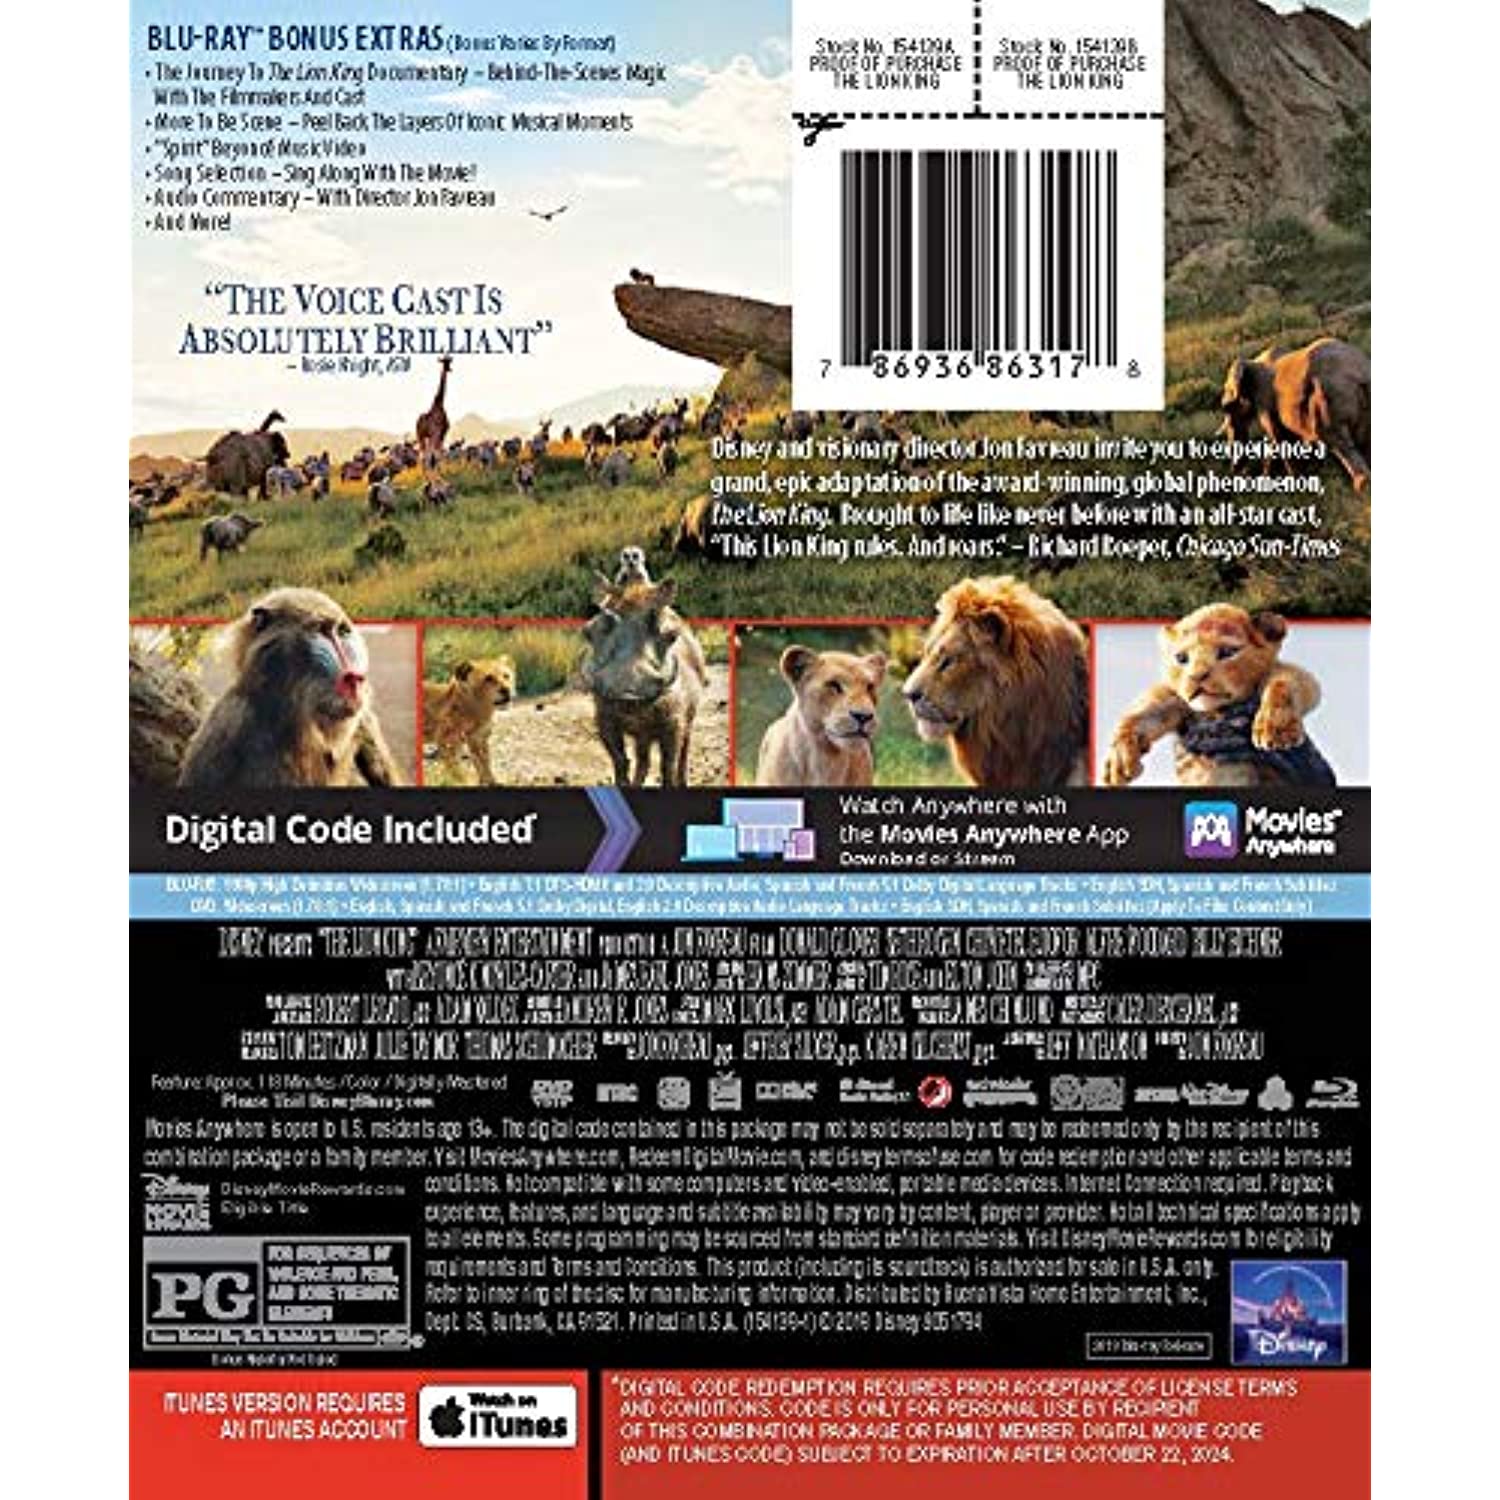 The Lion King 2019 (Blu-ray + DVD + Digital Copy) - image 1 of 6